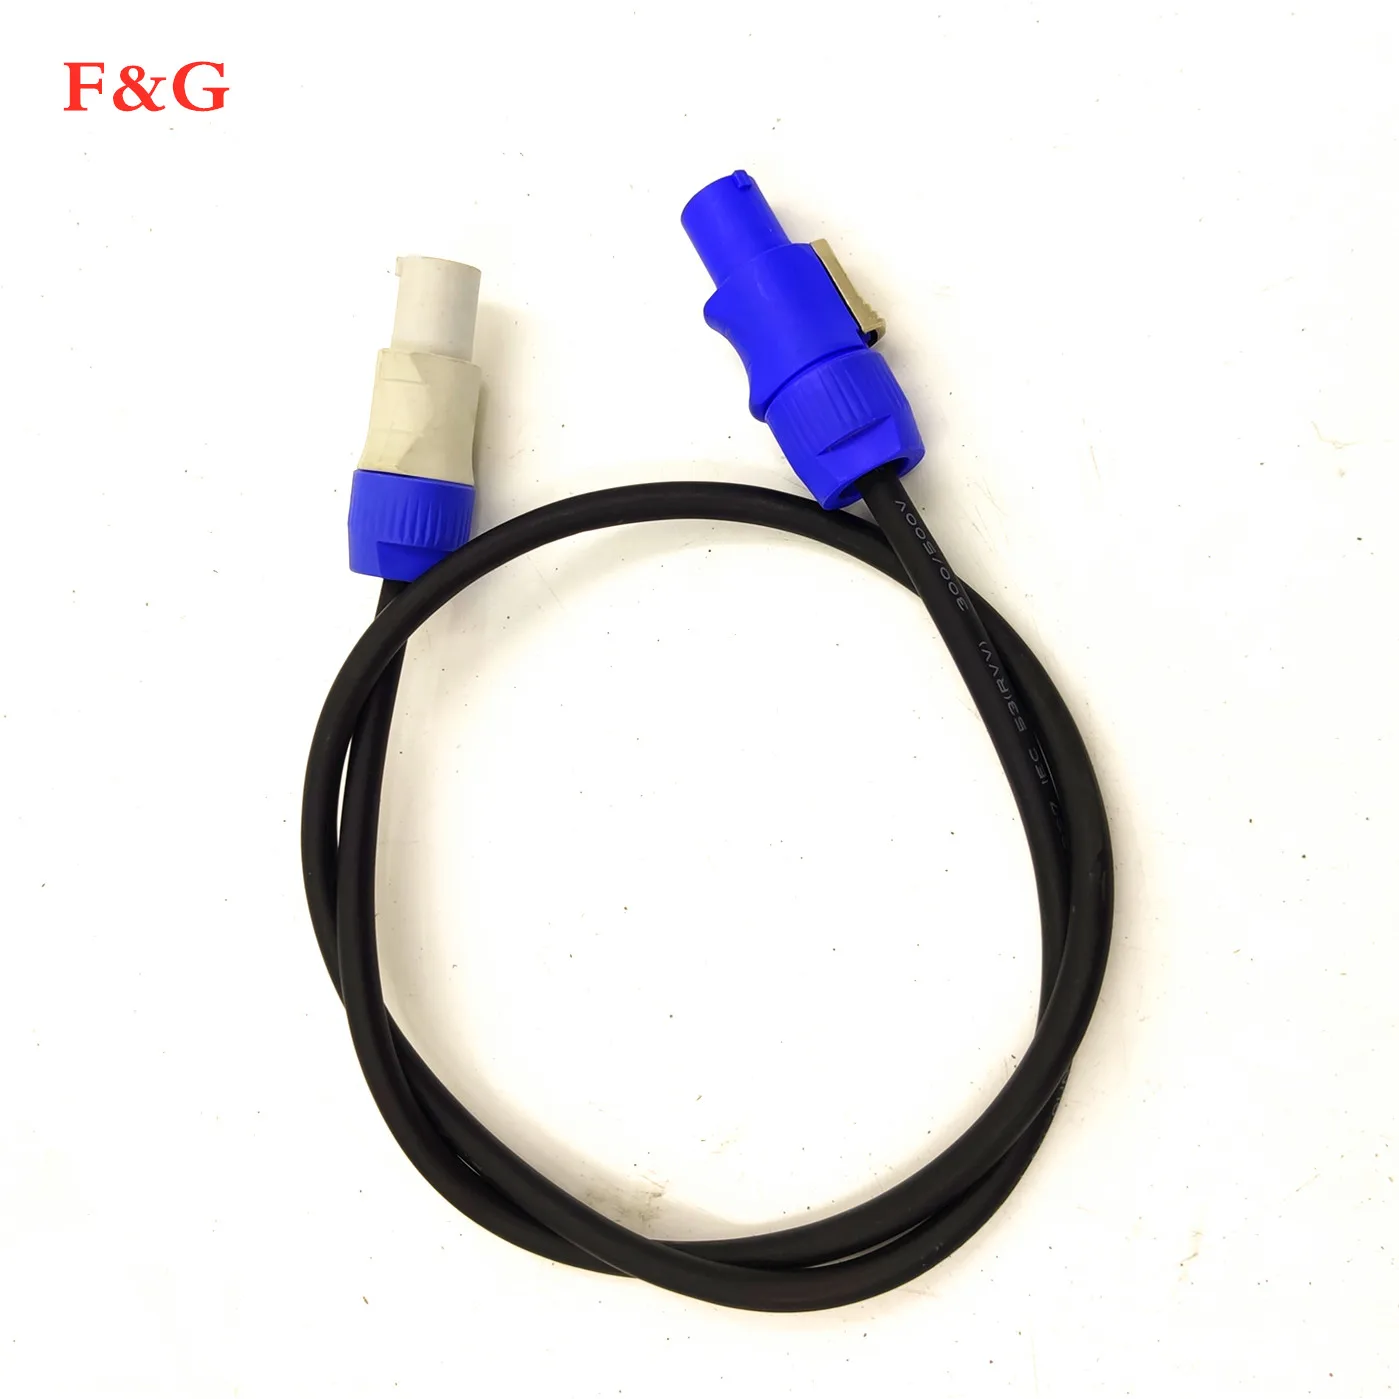 

Conector Powercon A20 220A AC conector de clavija de alimentacin azul/blanco para LED Par \ cabeza mvil LED Cable de alimentac